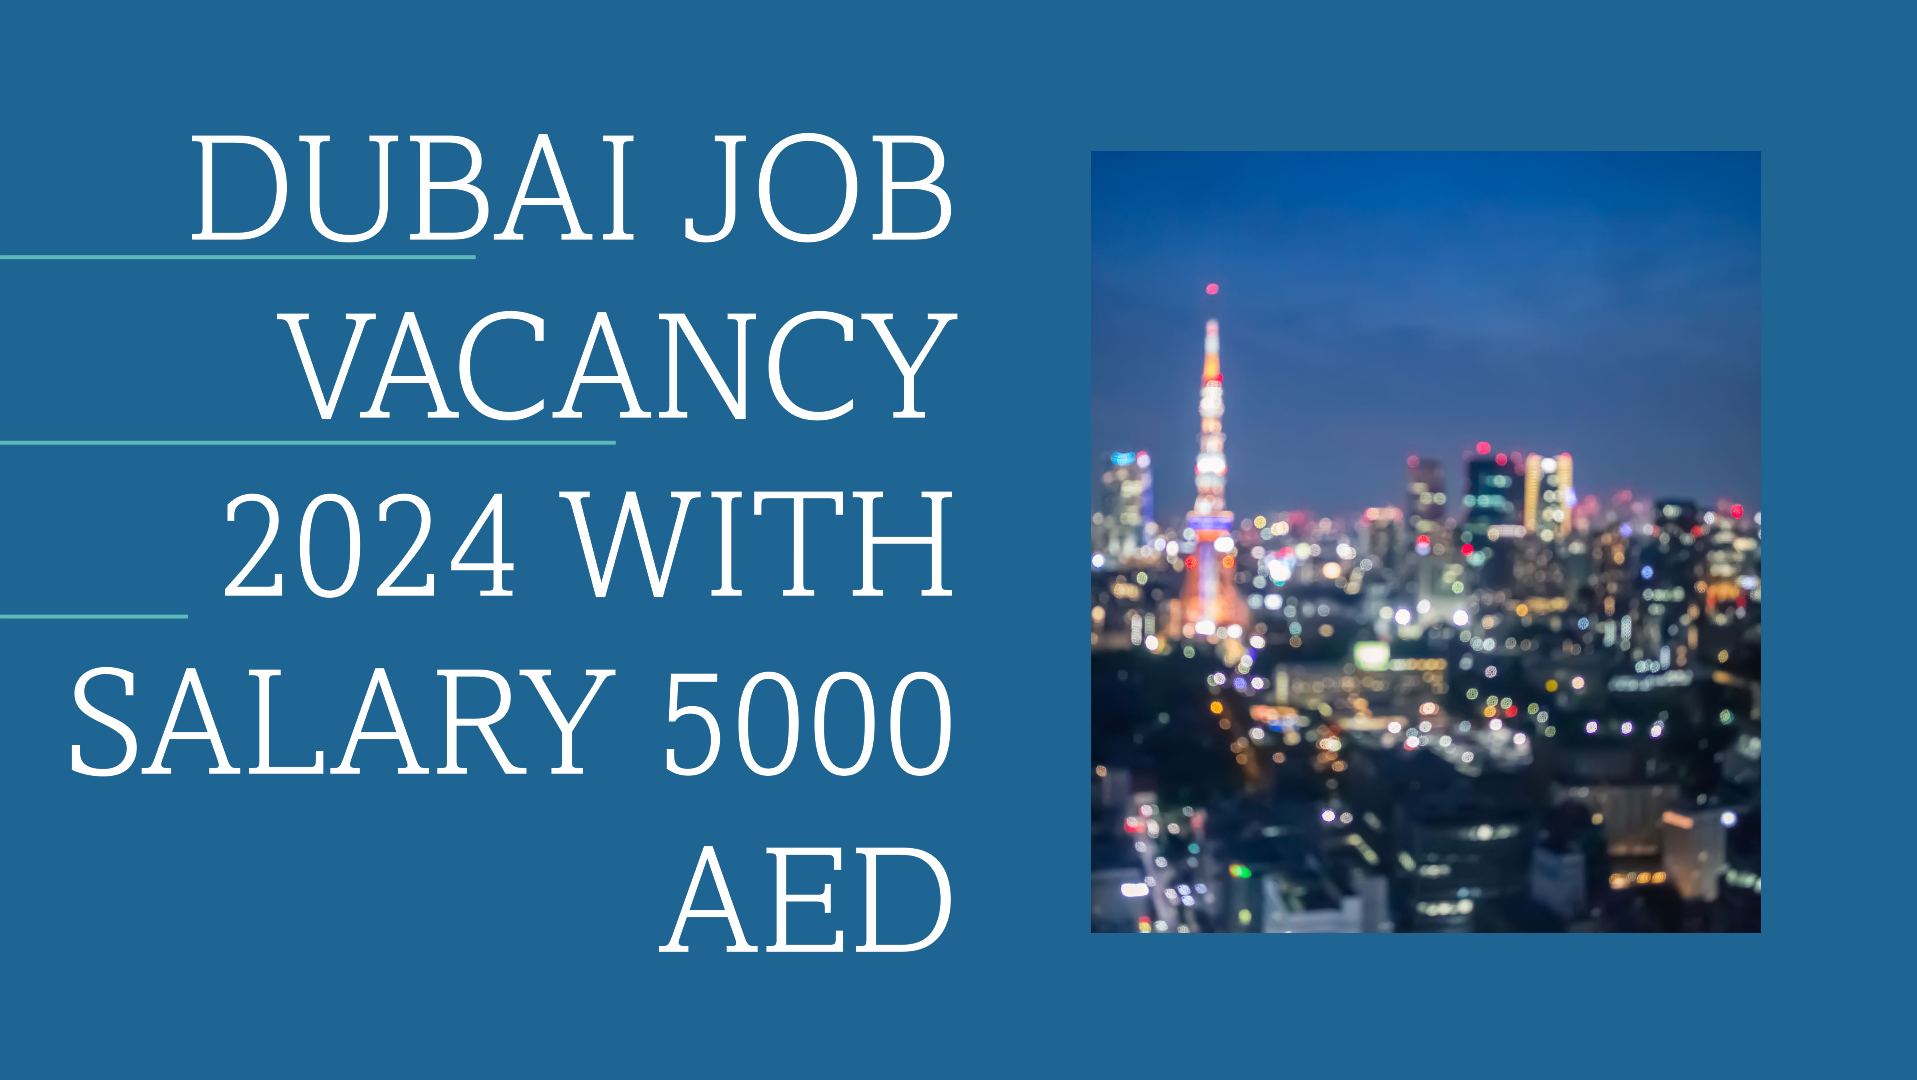 dubai job vacancy 2024 with salary 5000 AED